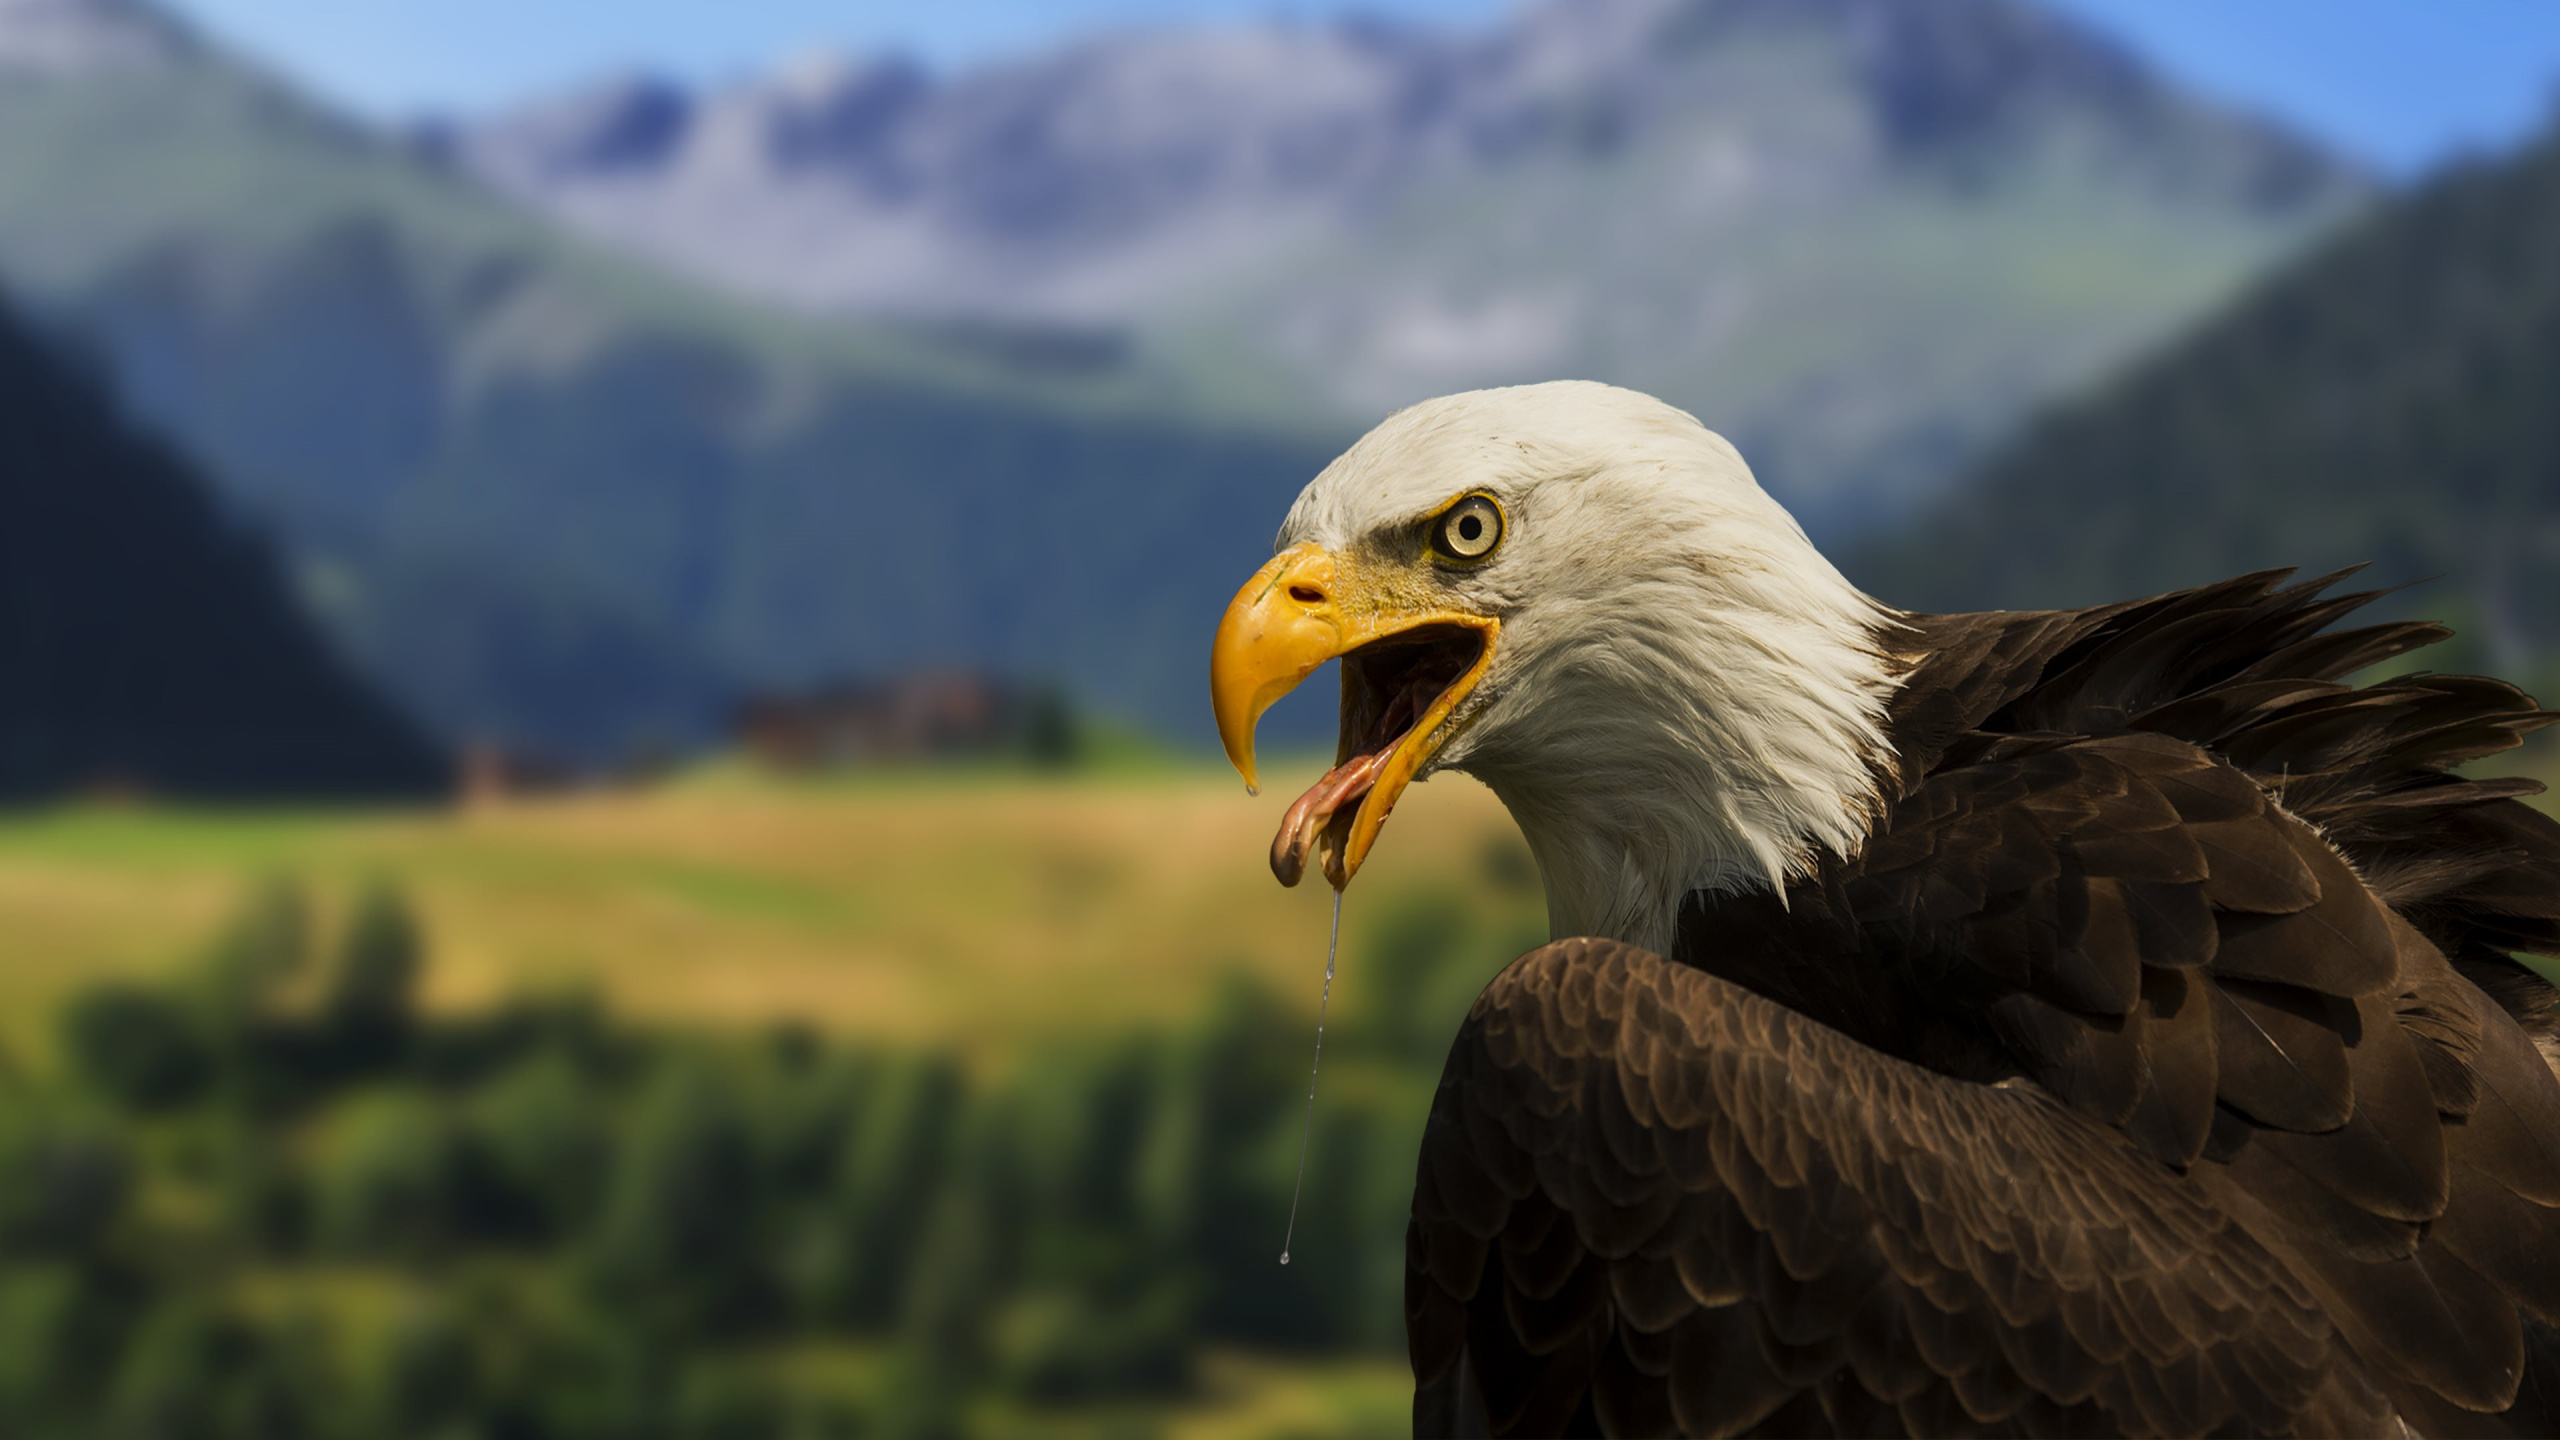 Bald Eagle in Tilt Shift Lens. Wallpaper in 2560x1440 Resolution